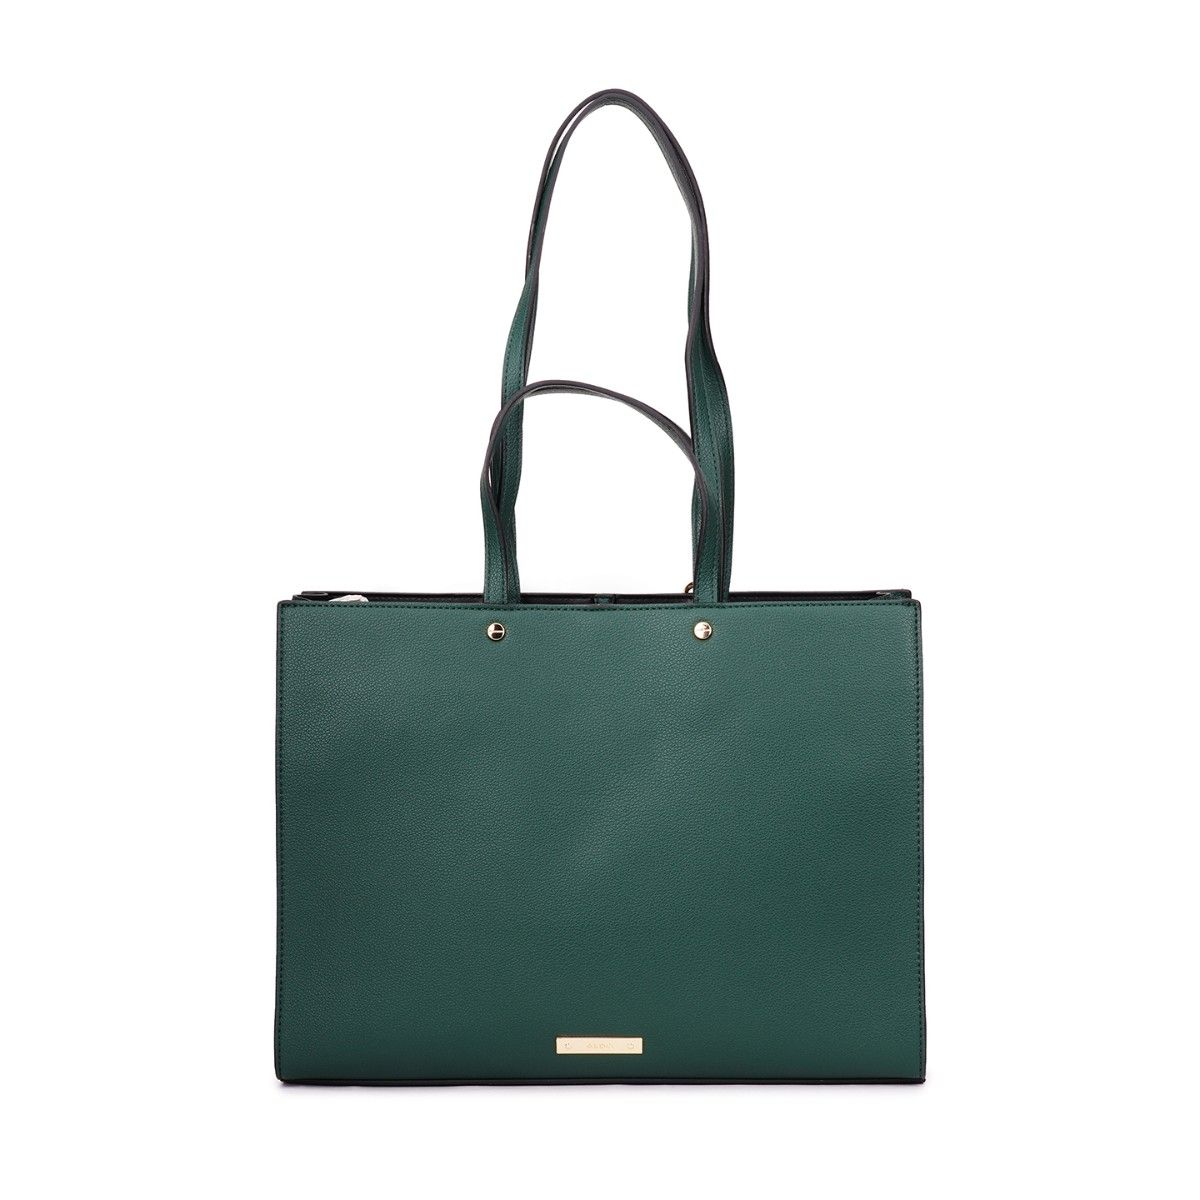 Buy Aldo Truly Women Green Tote Bag Online